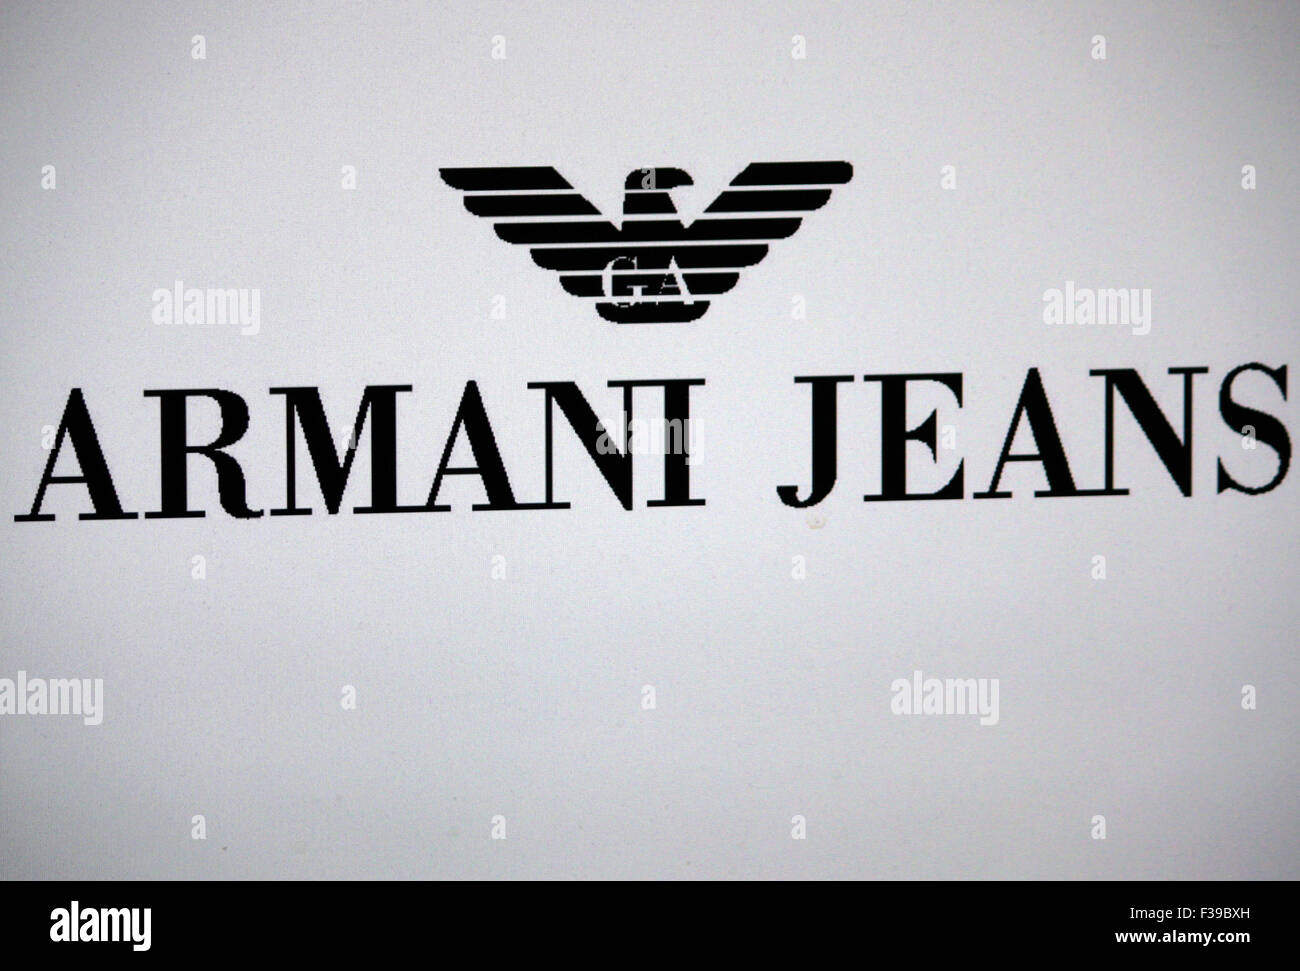 Markenname: "Armani Jeans", Berlin Stock Photo - Alamy